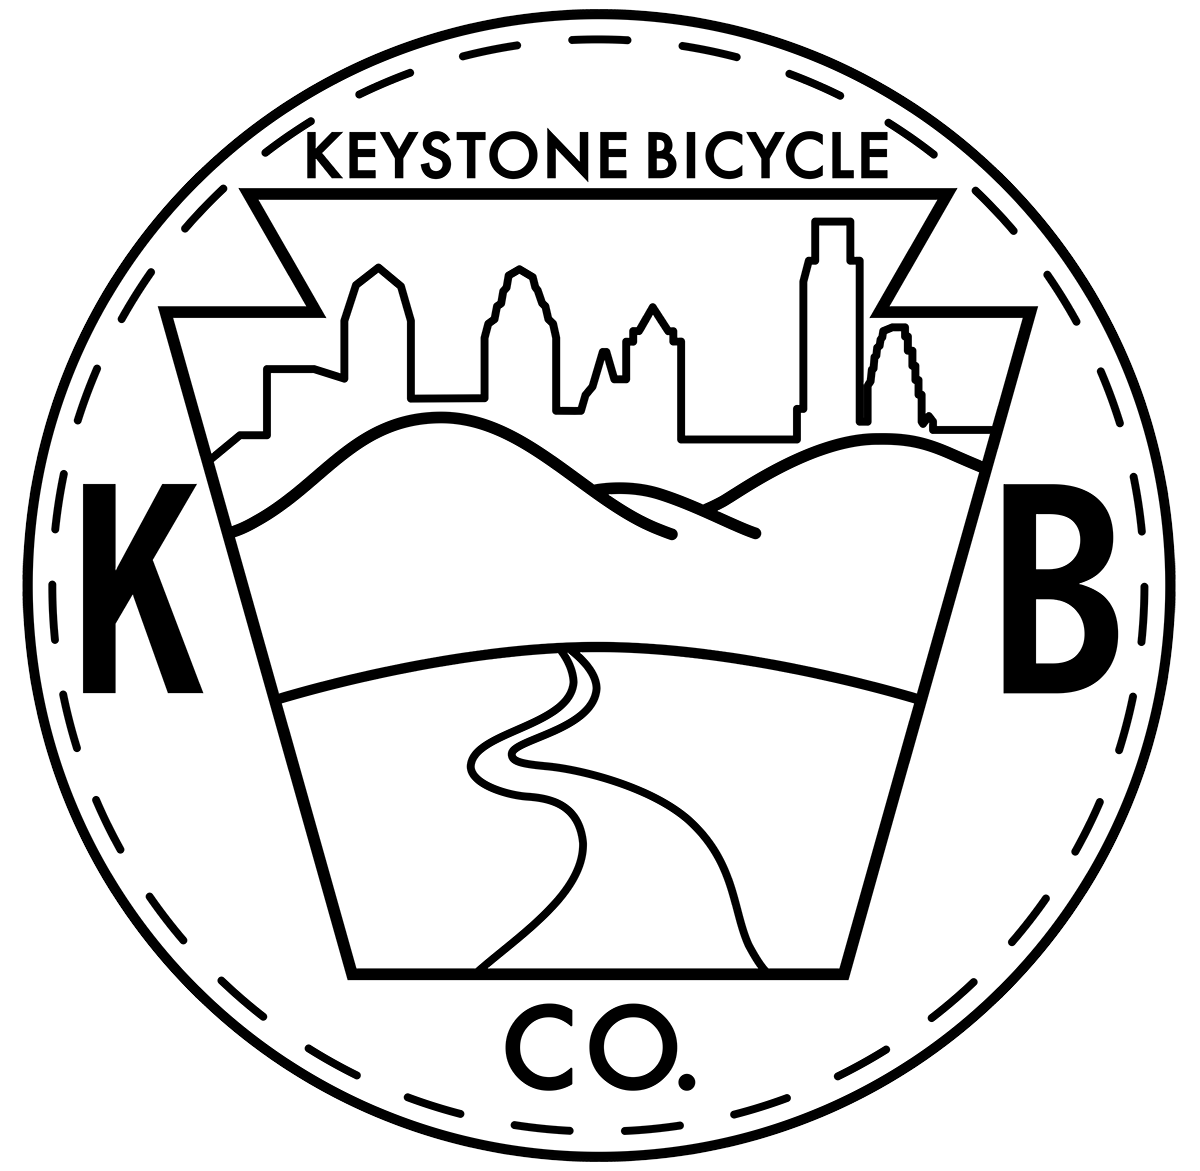 KEYSTONE BICYCLE CO.